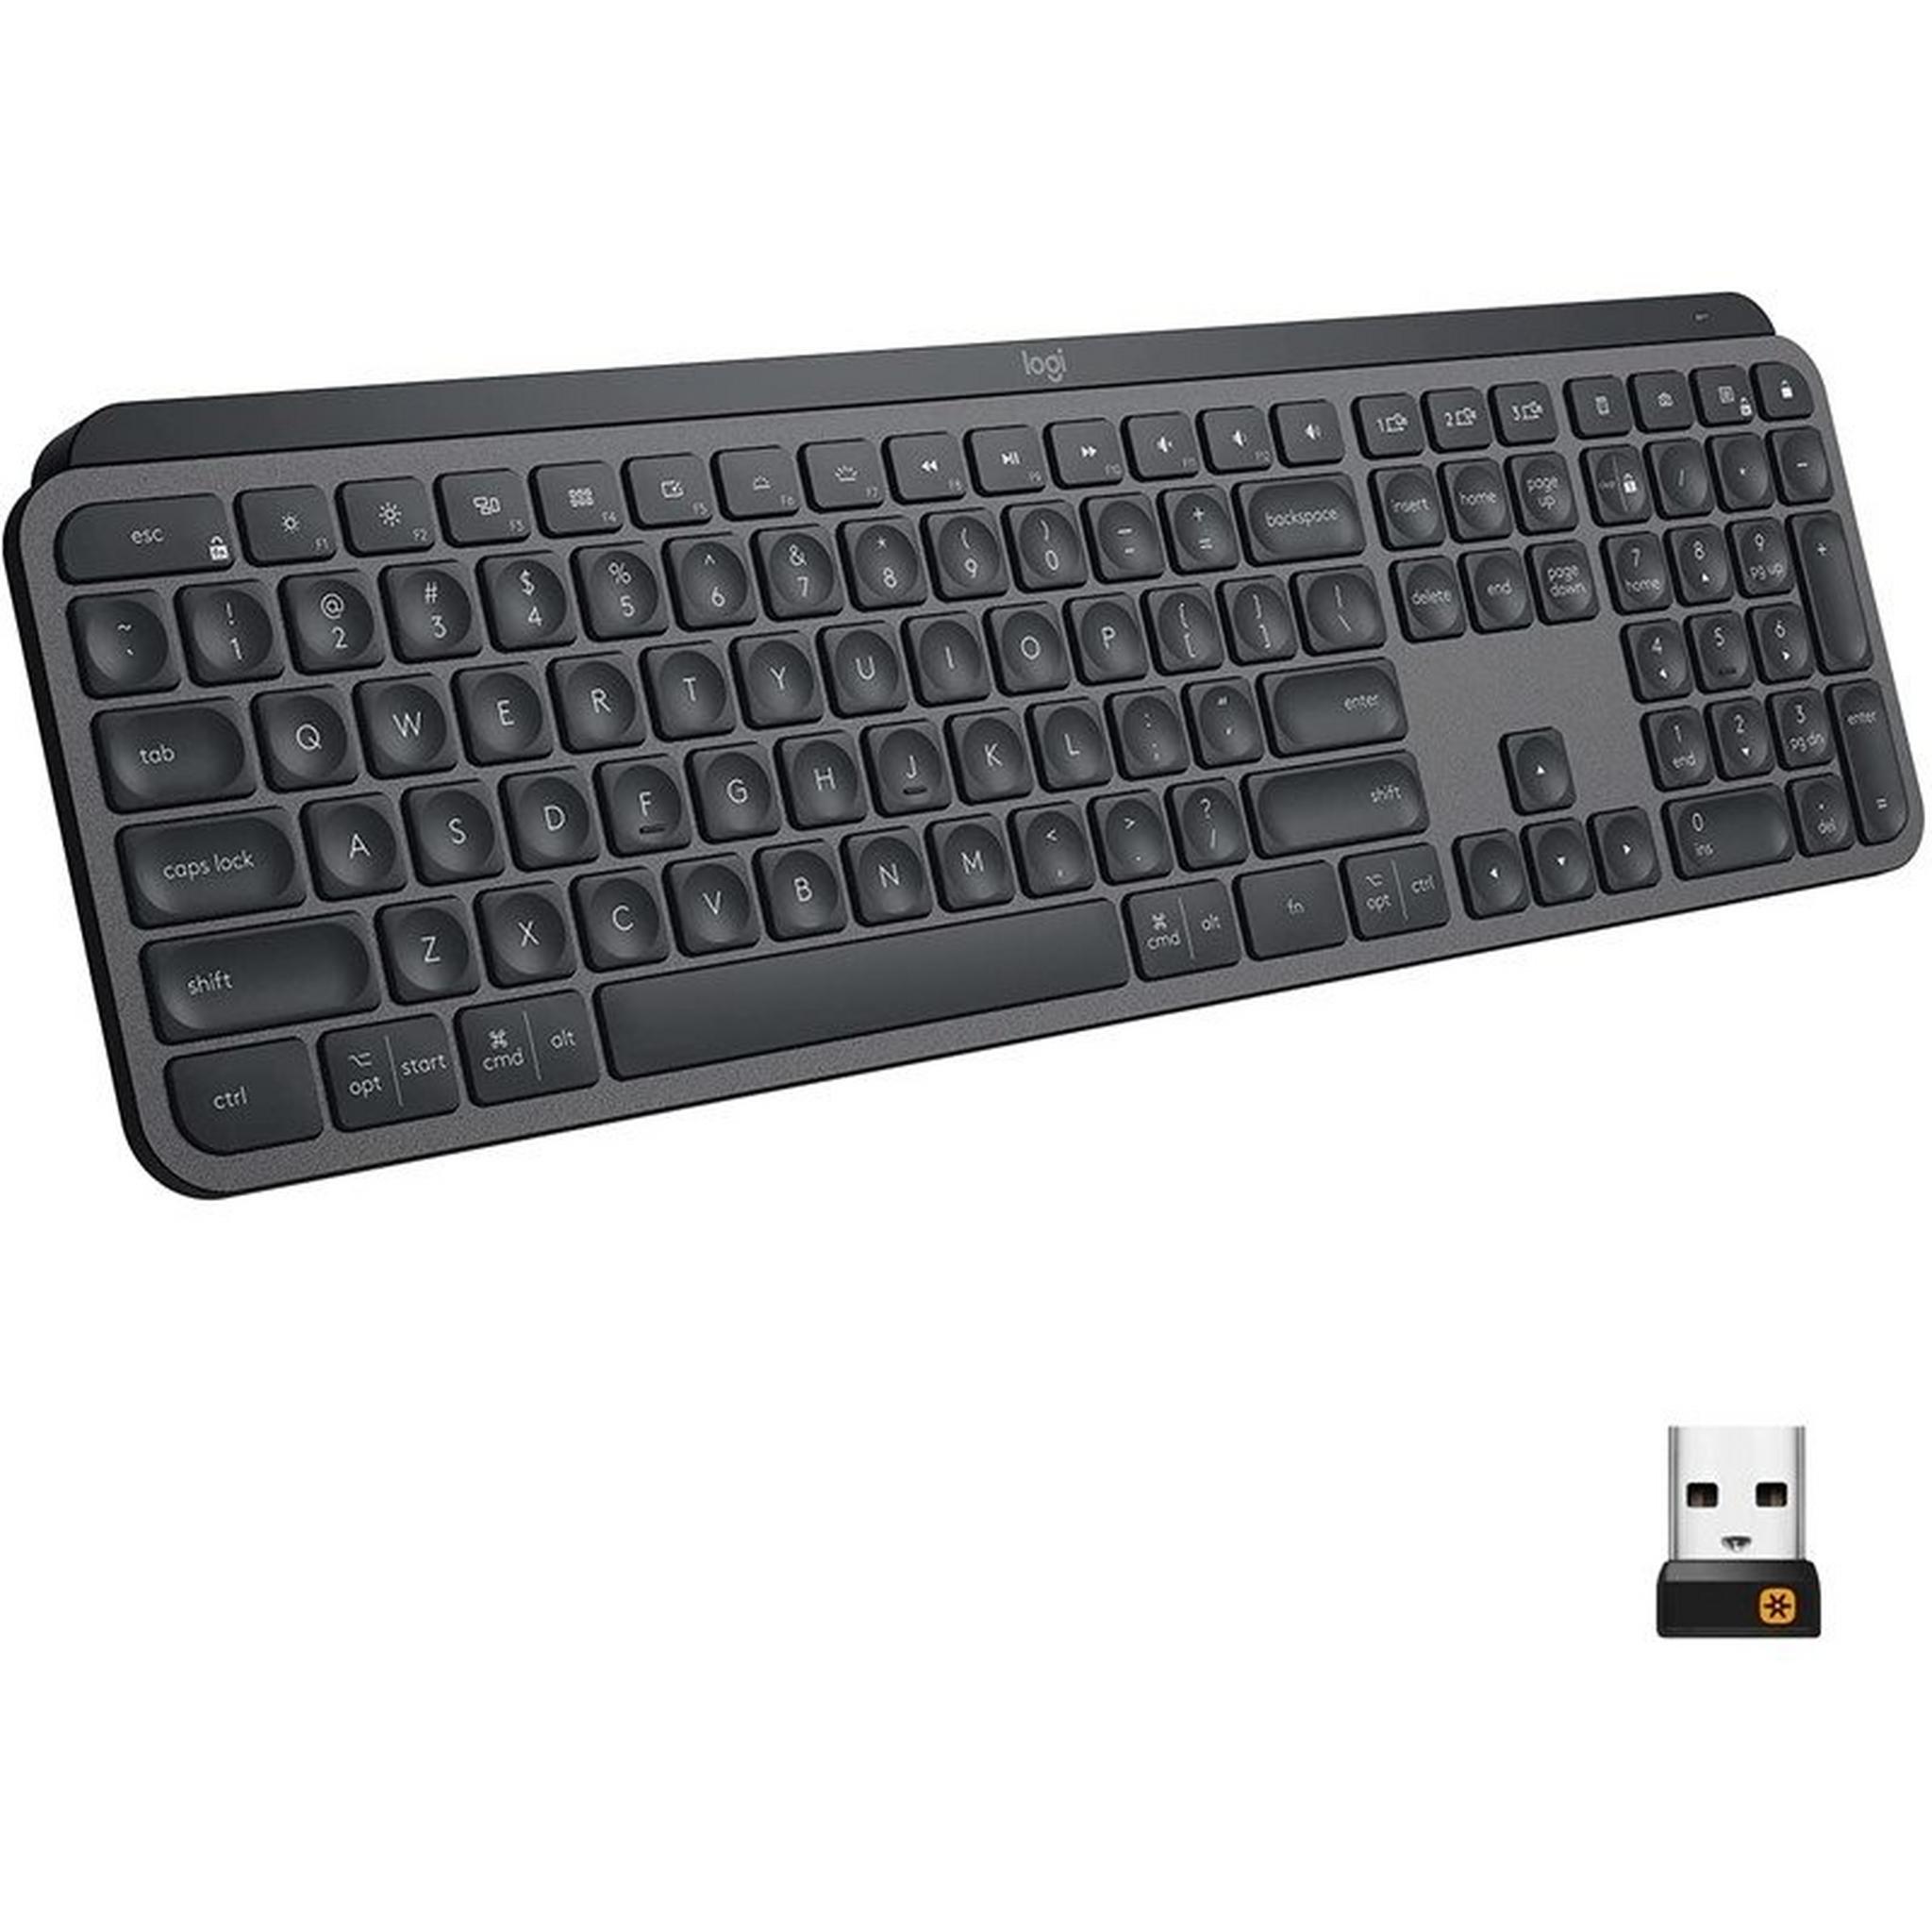 Logitech MX Keys Advanced Wireless Illuminated Arabic Keyboard With Numeric Pad - Graphite